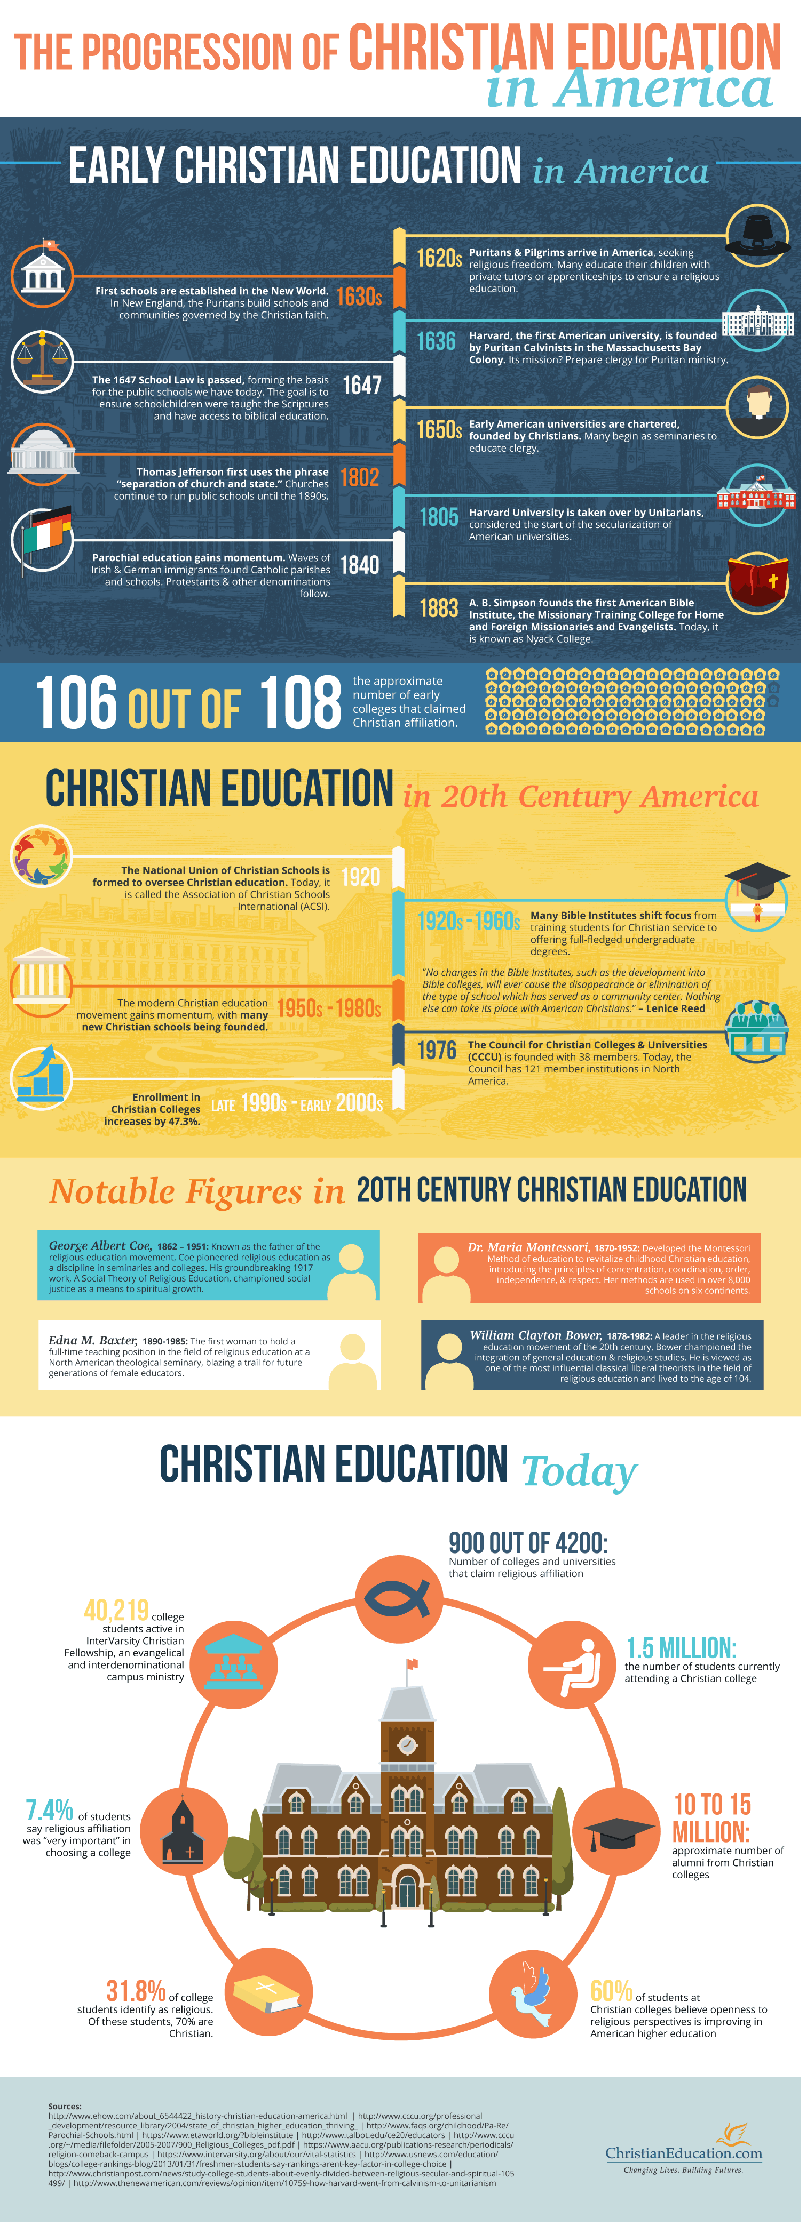 The Progression of Christian Education in America